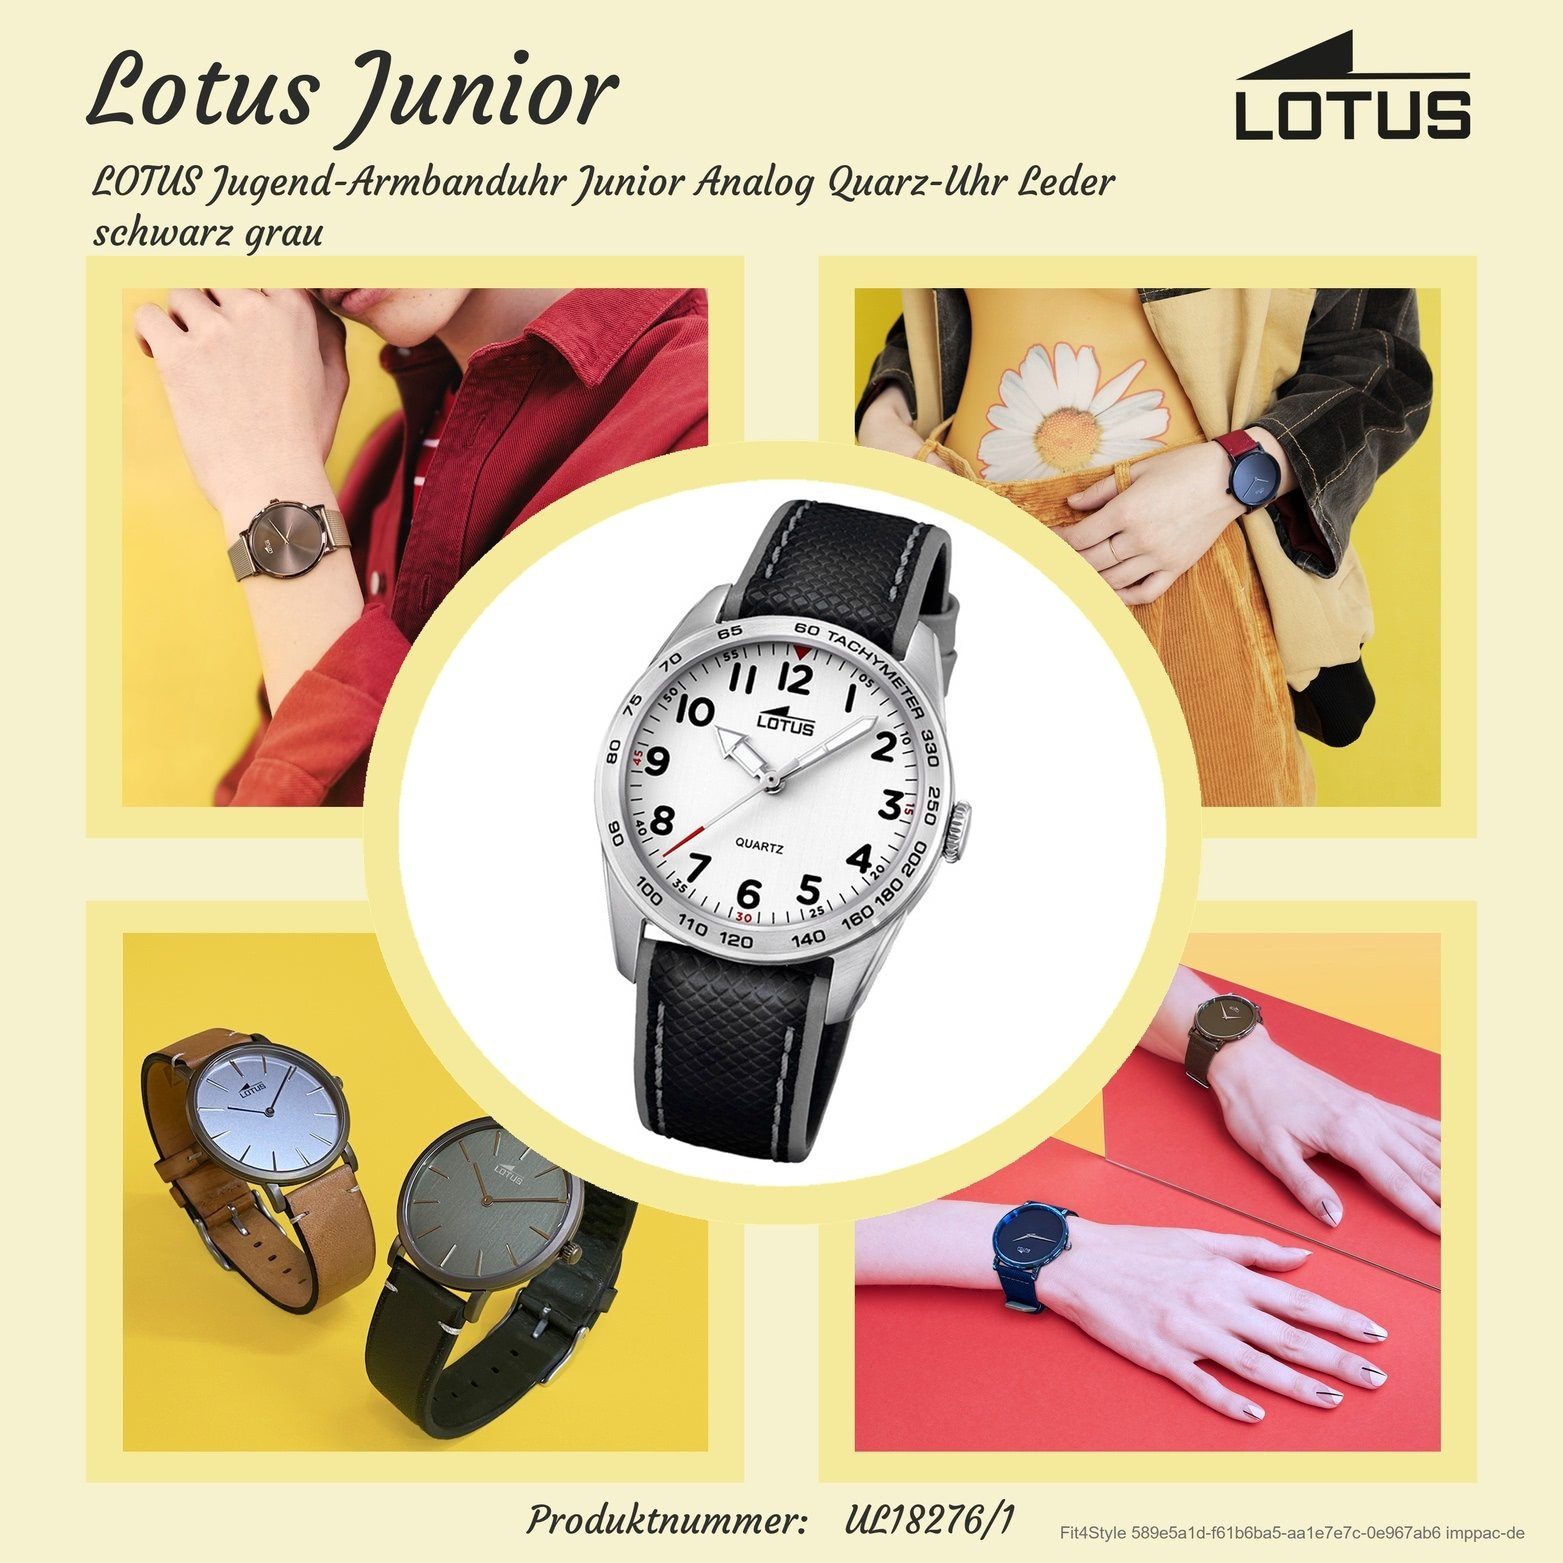 Elegant Gehäuse, Leder mit L18276/1, Lotus mittel Uhr rundes Lederarmband, 33mm), Quarzuhr Jugenduhr Lotus Jugend (ca.